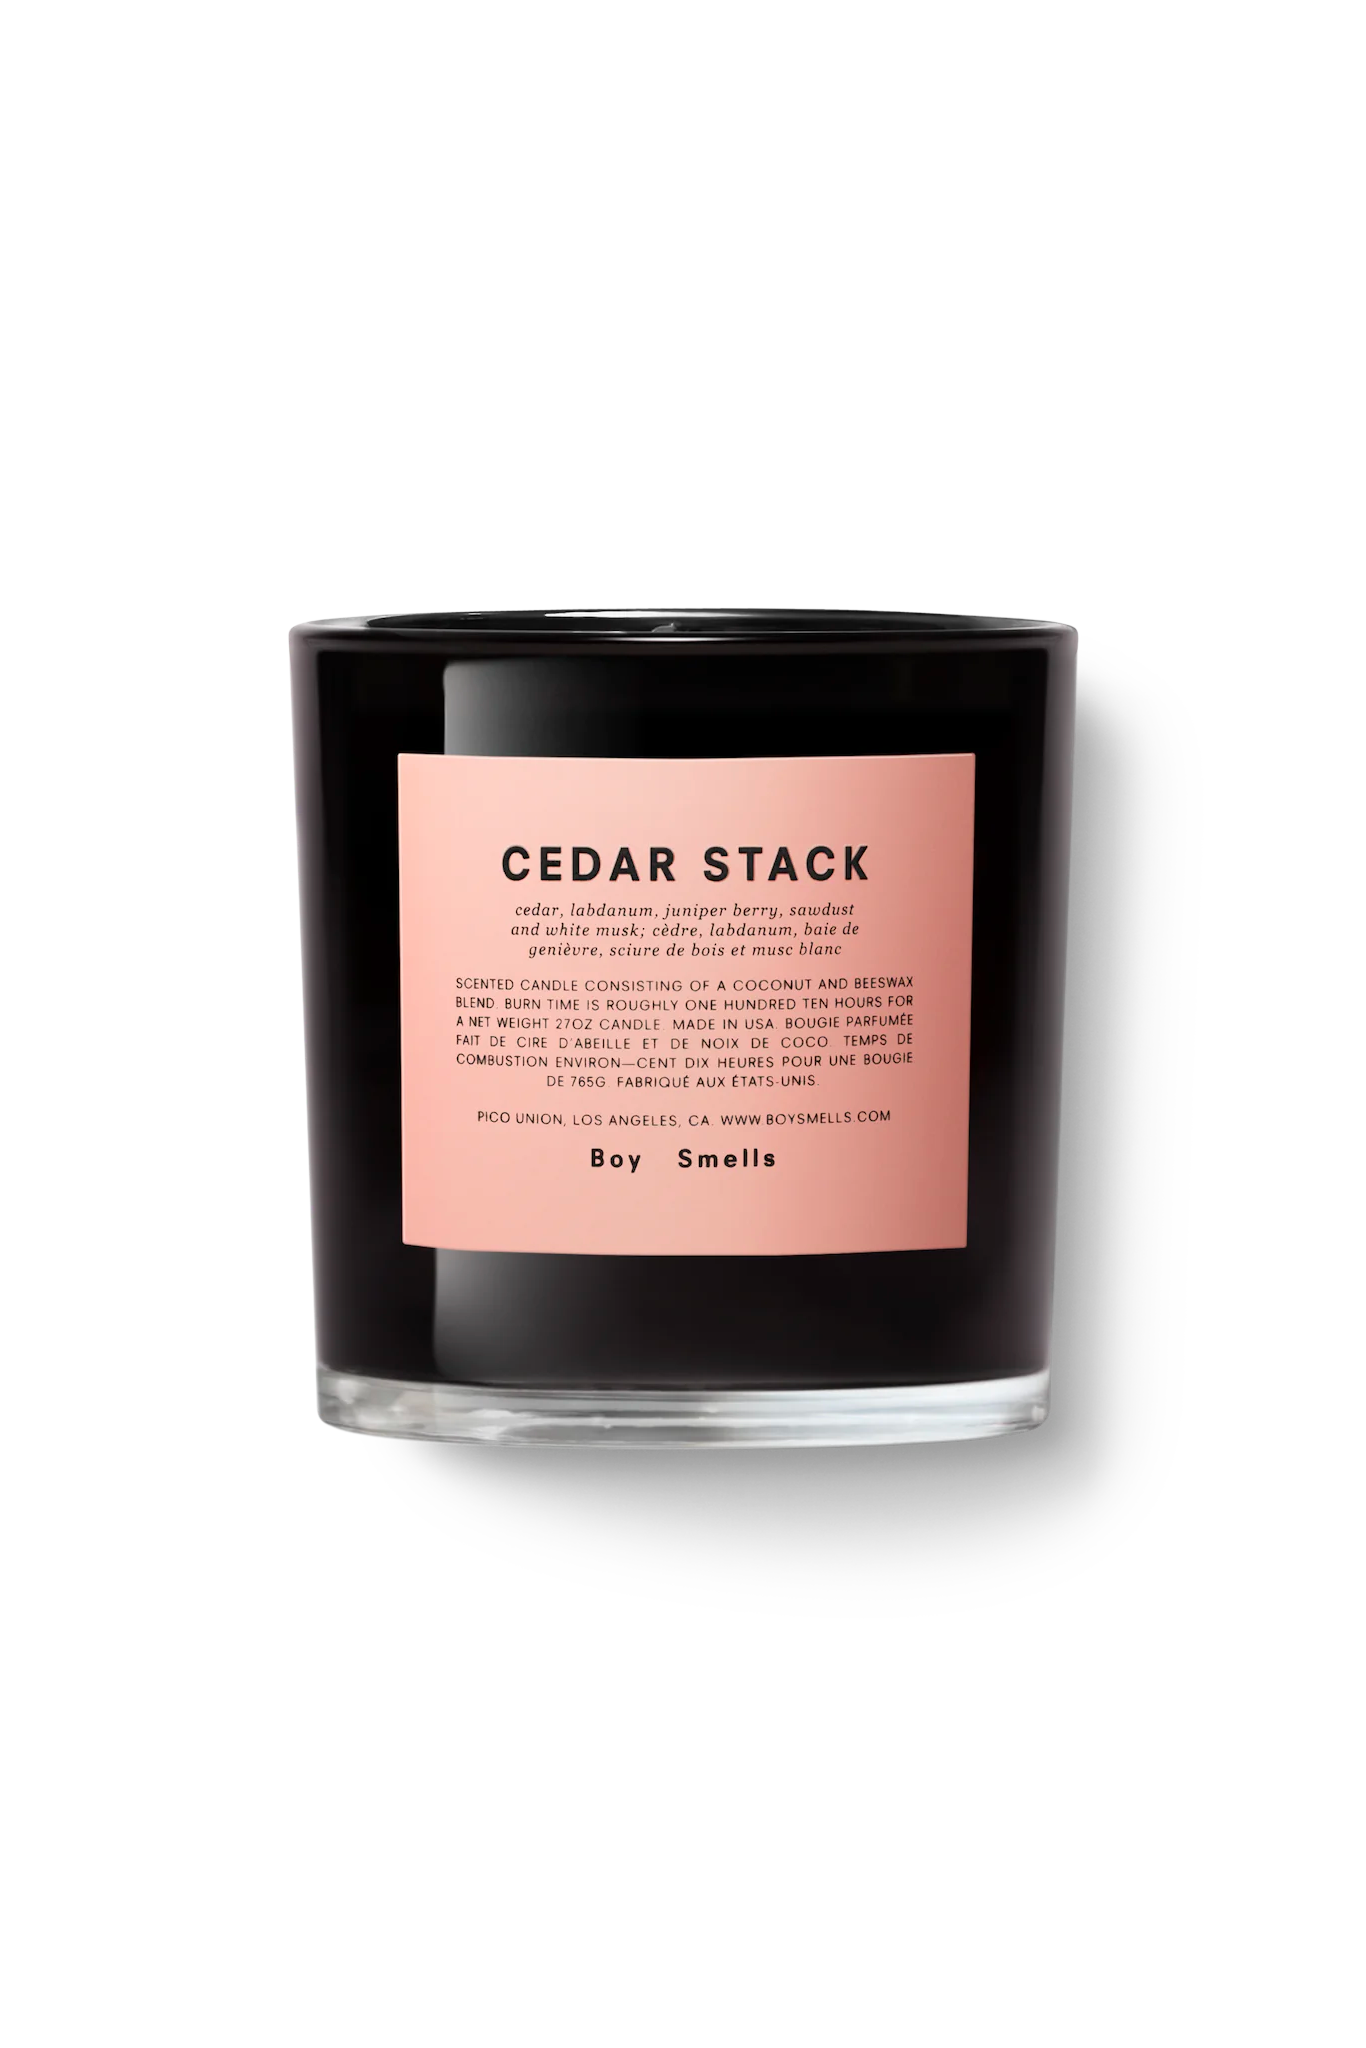 Cedar Stack Magnum Scented Candle